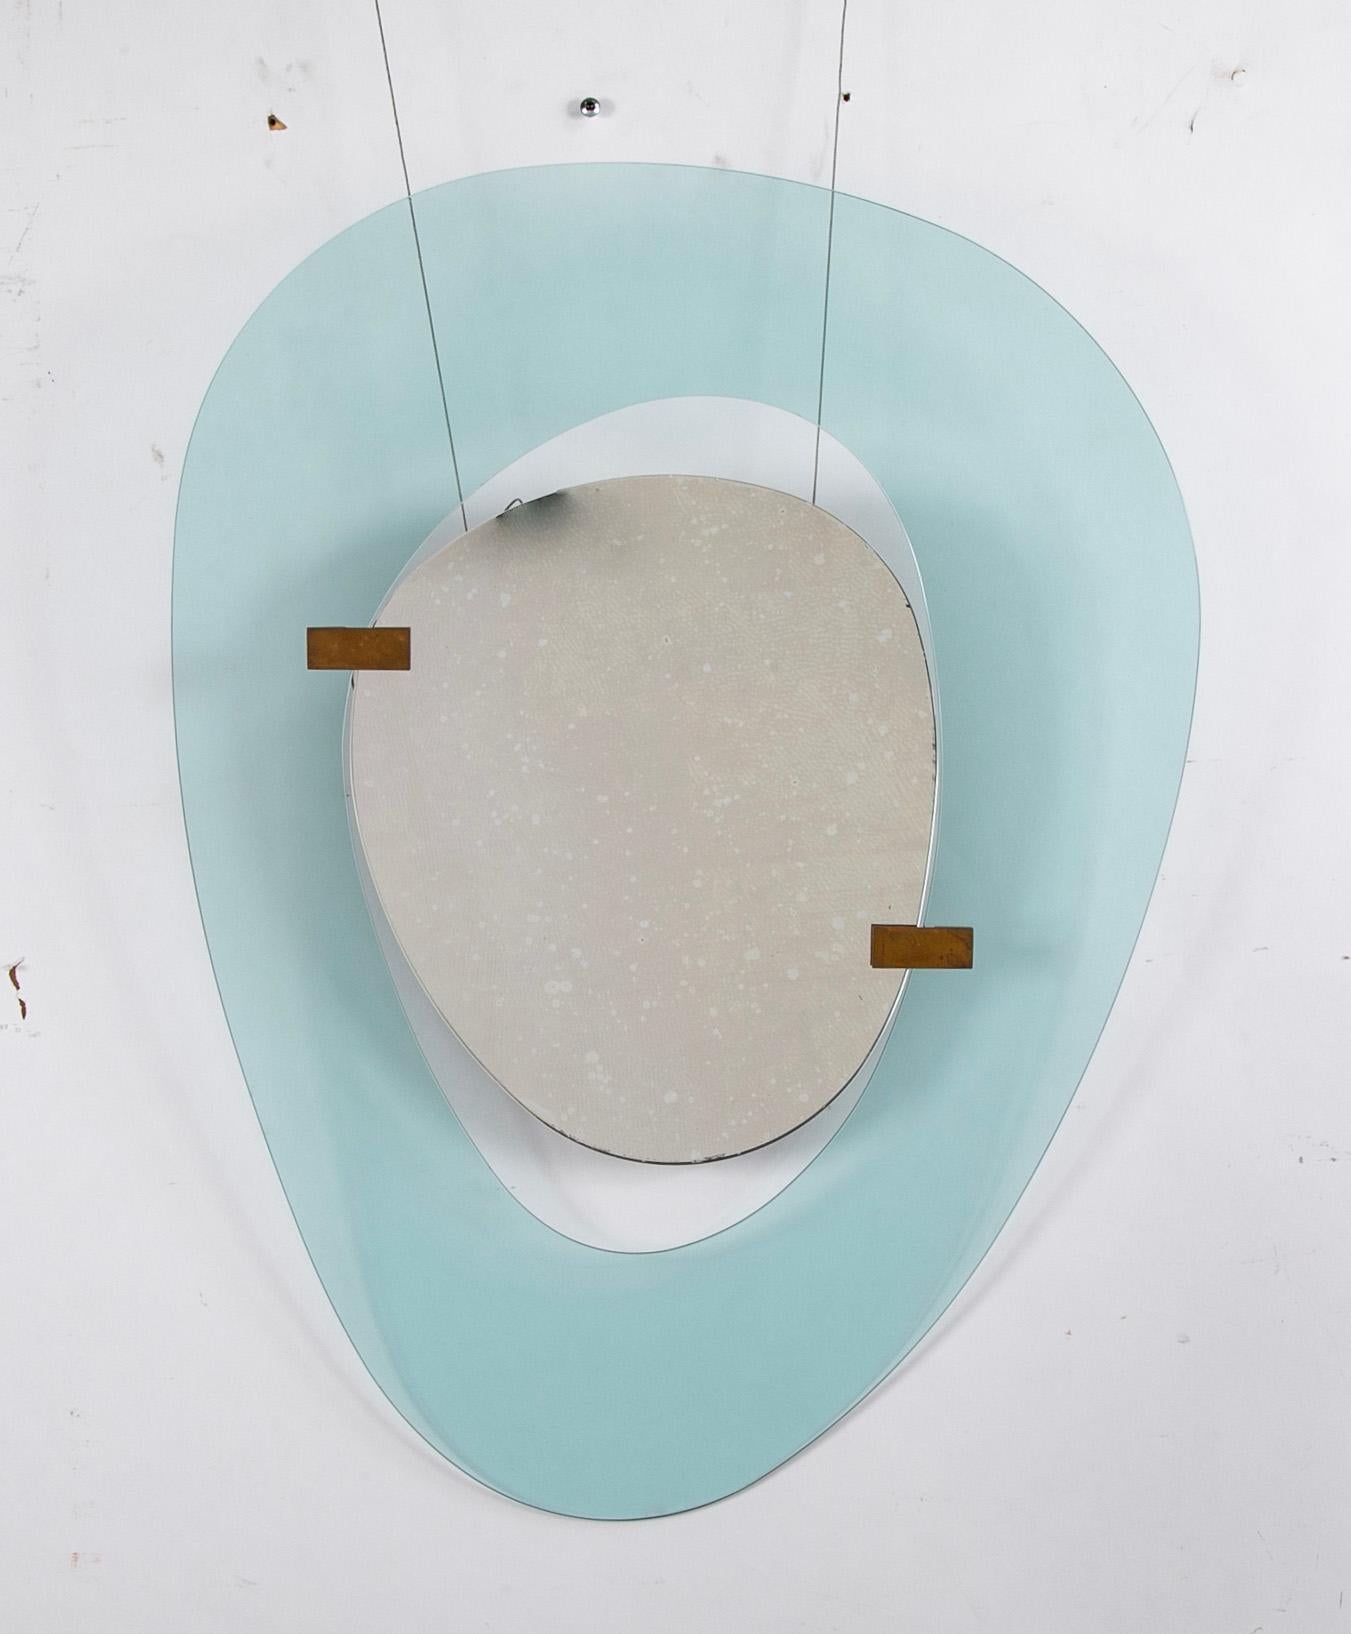 Miroir sculptural de Max Ingrand pour Fontana Arts avec cadre asymétrique en verre bleu poli. 

